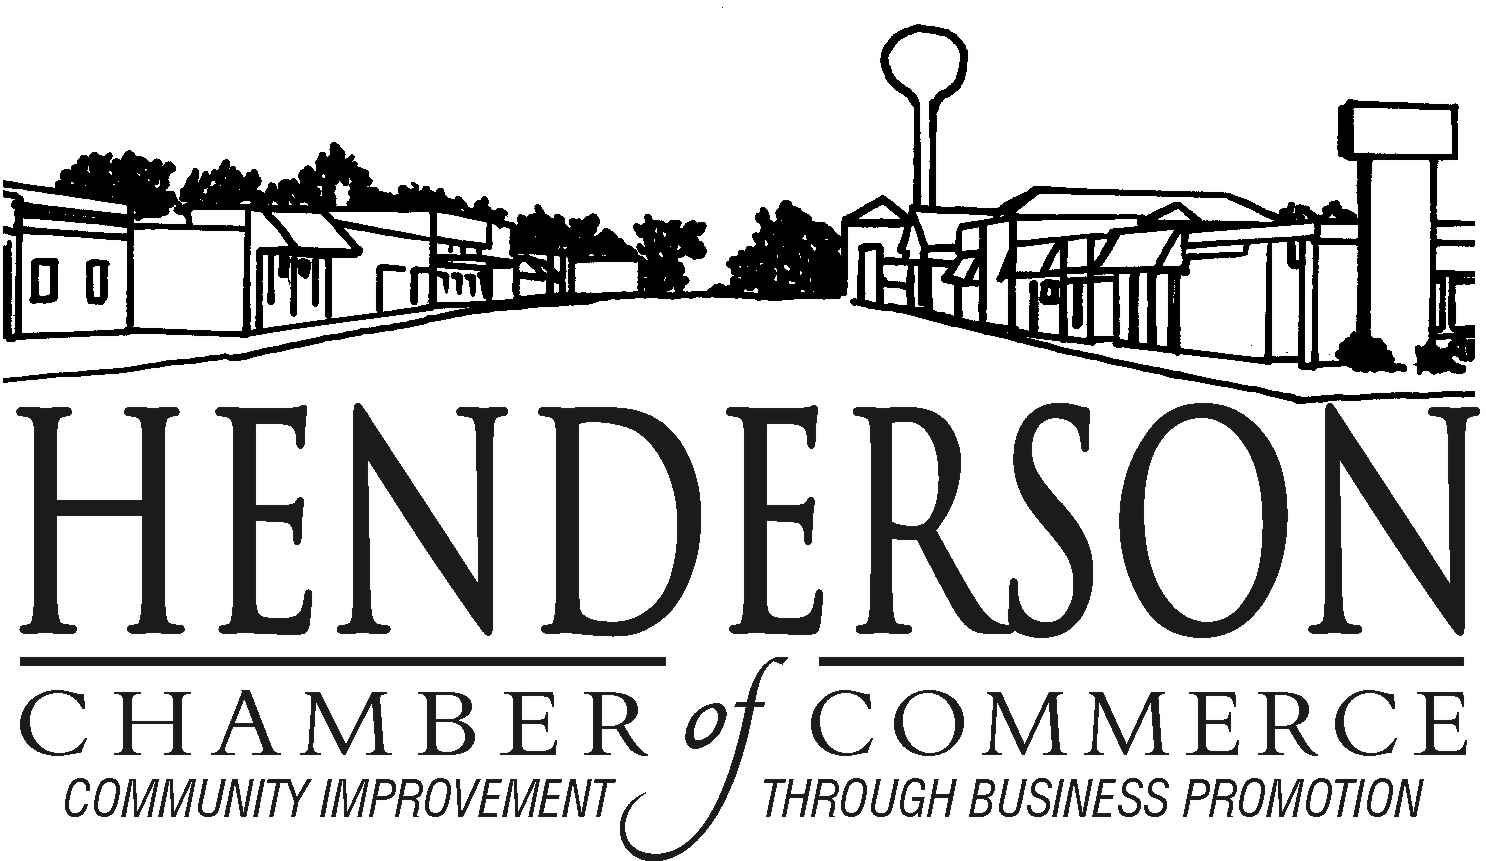 City Maintenance - Henderson